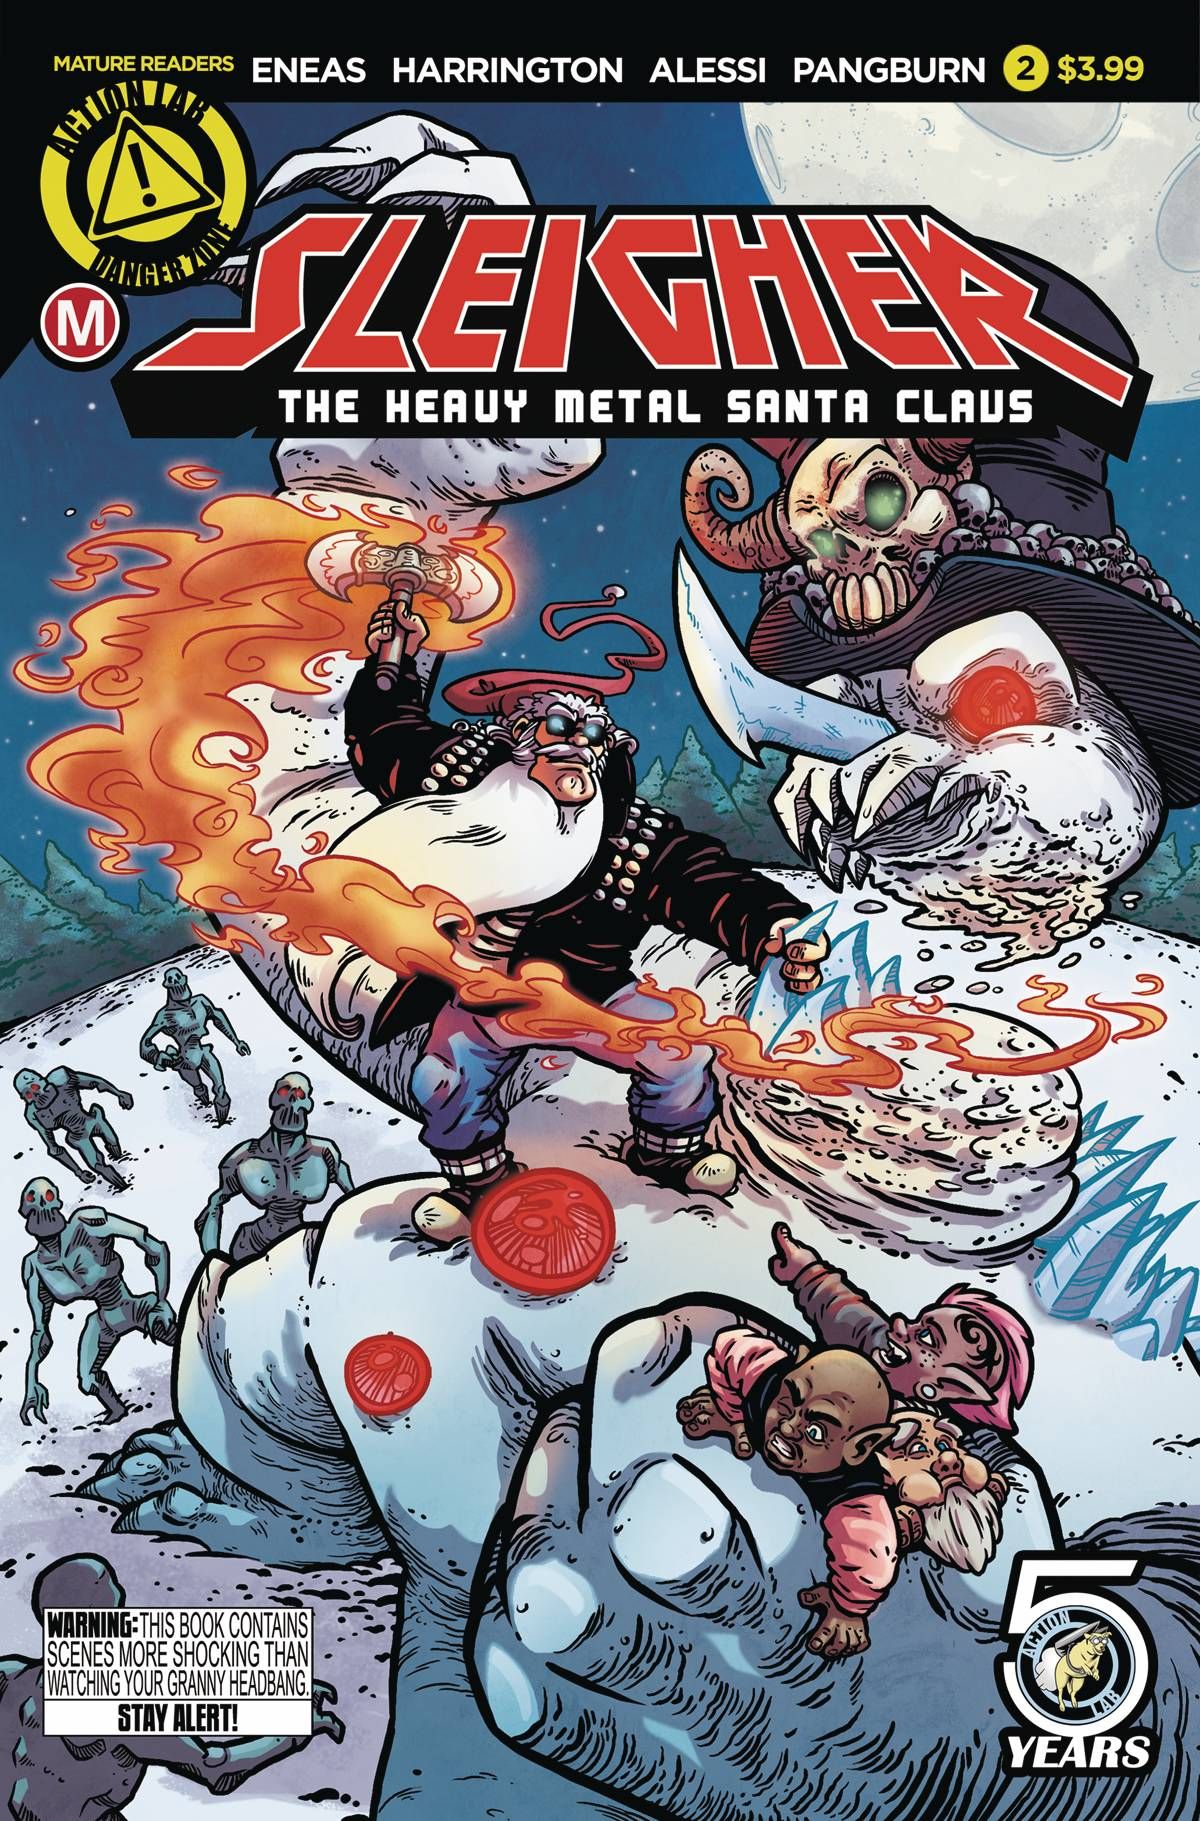 Sleigher: The Heavy Metal Santa Claus #2 Comic